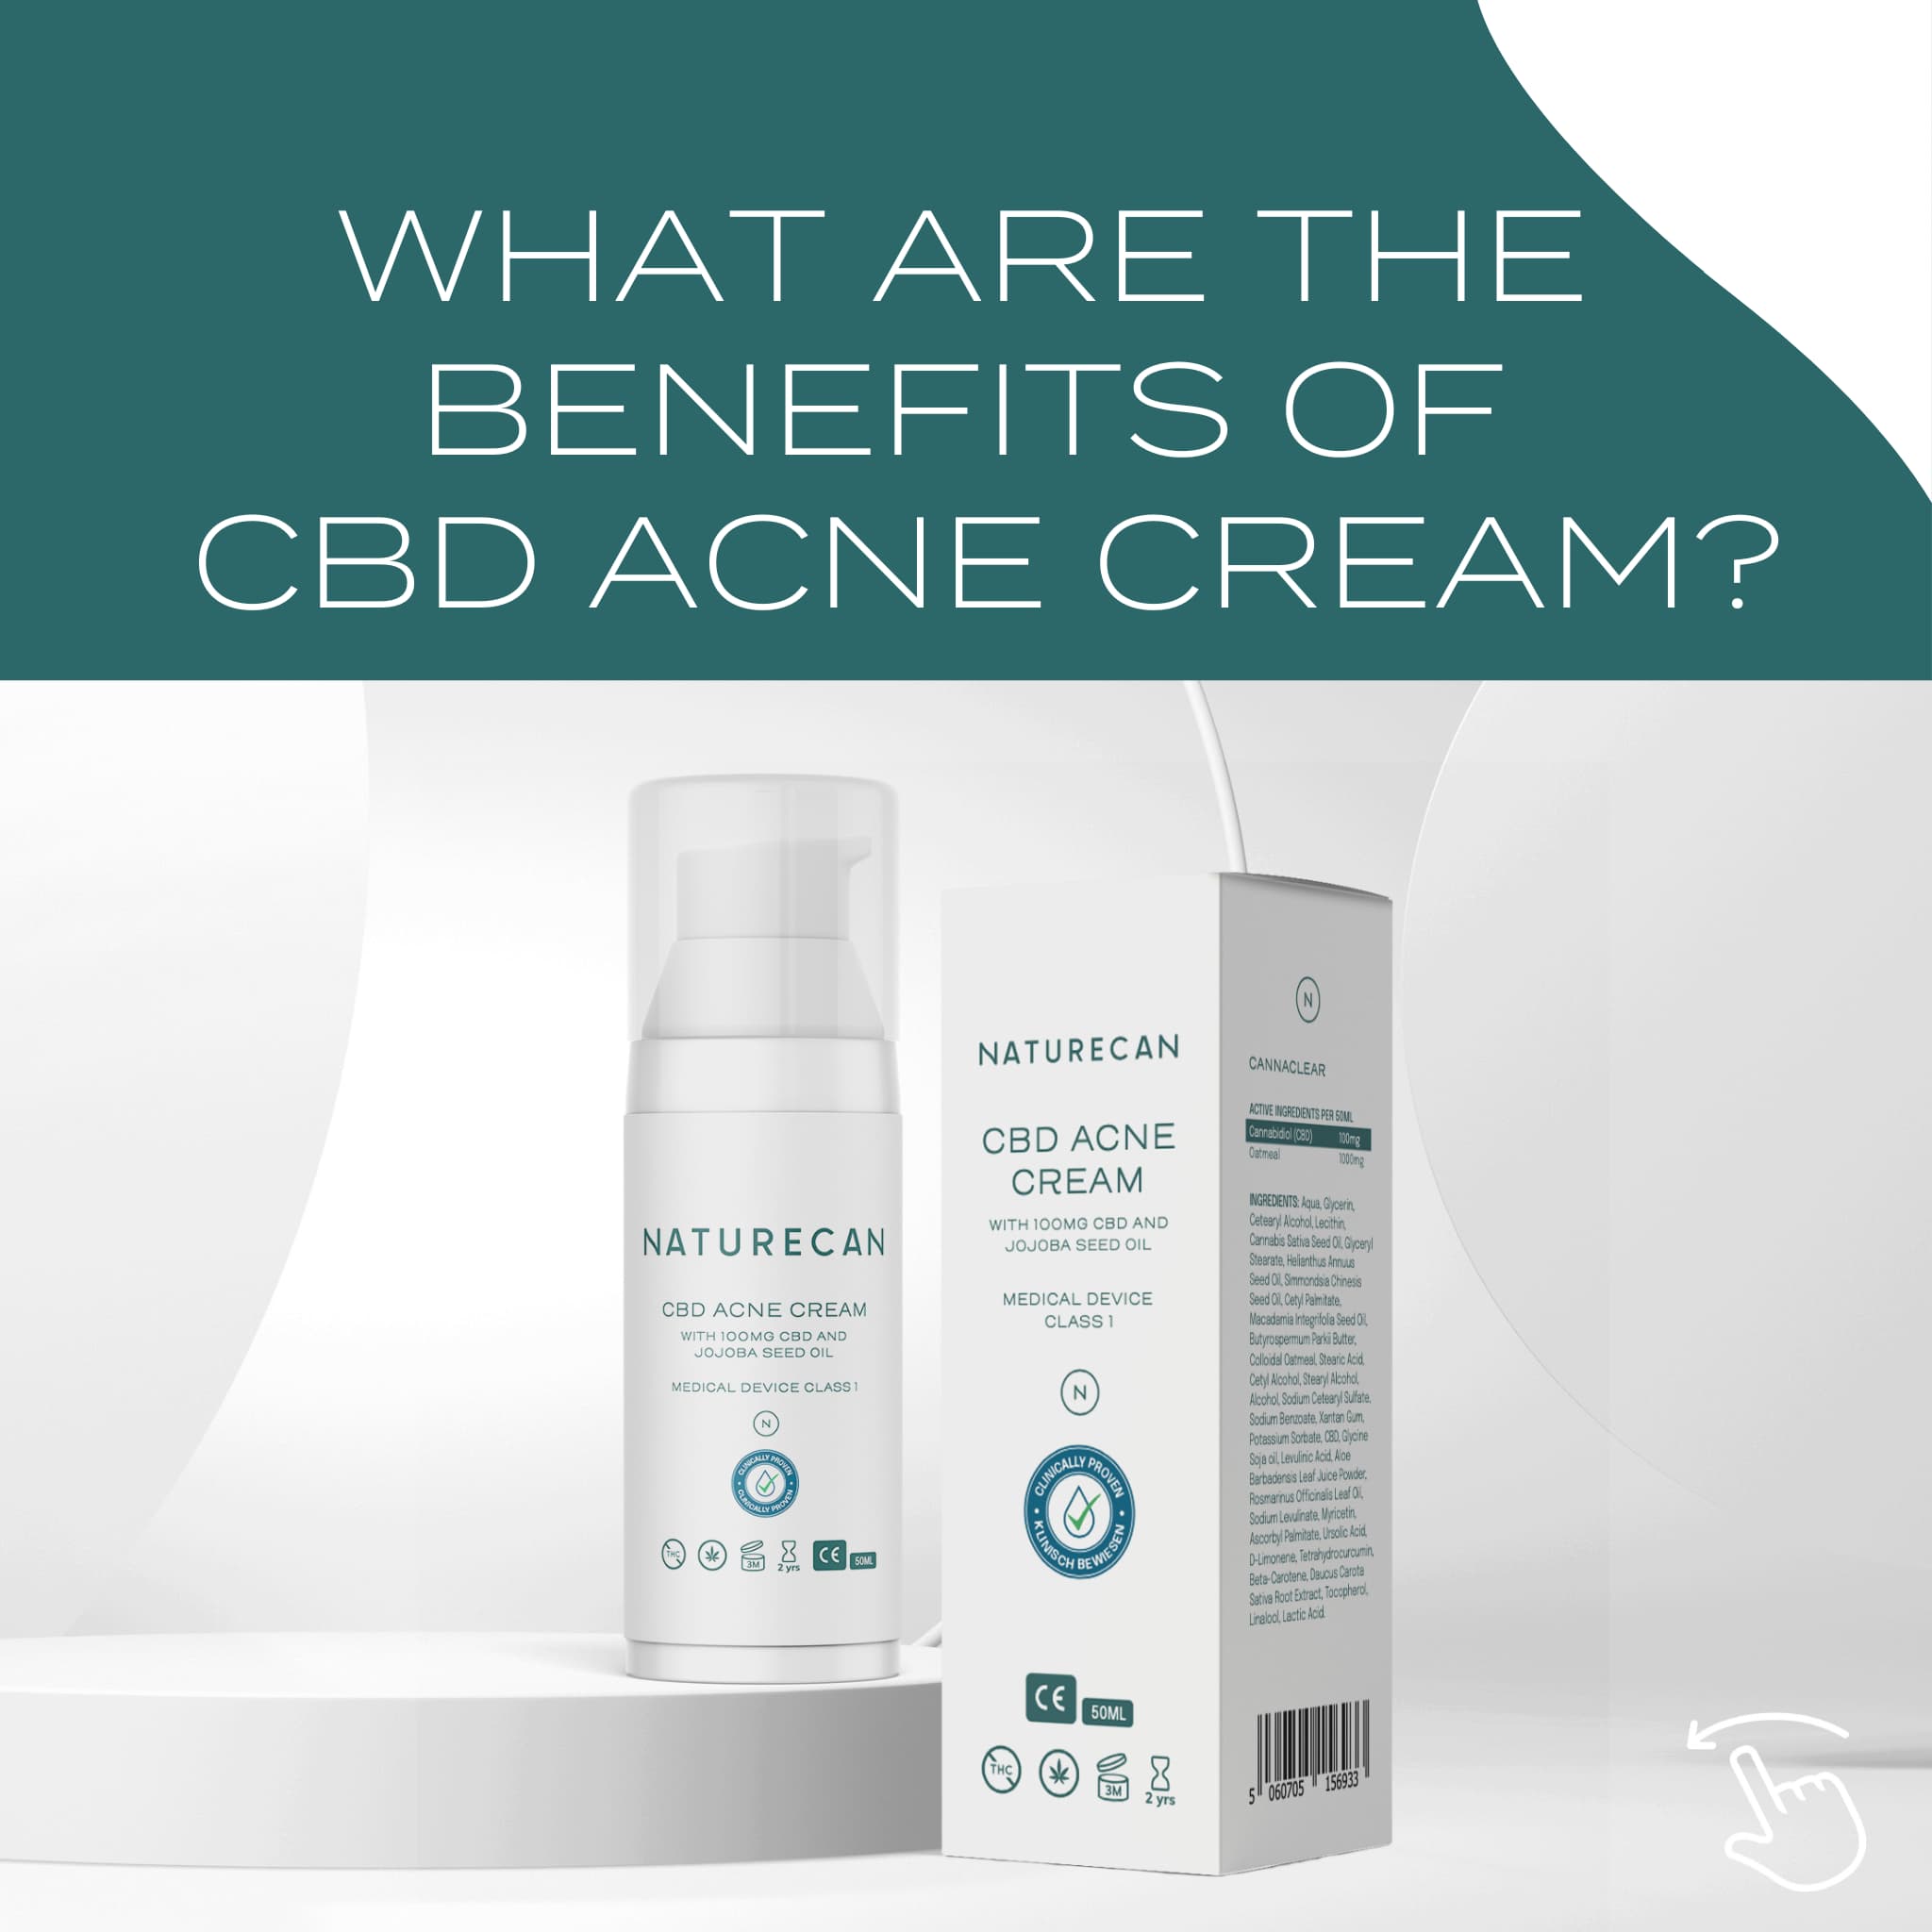 What are the CBD Acne Cream Benefits?